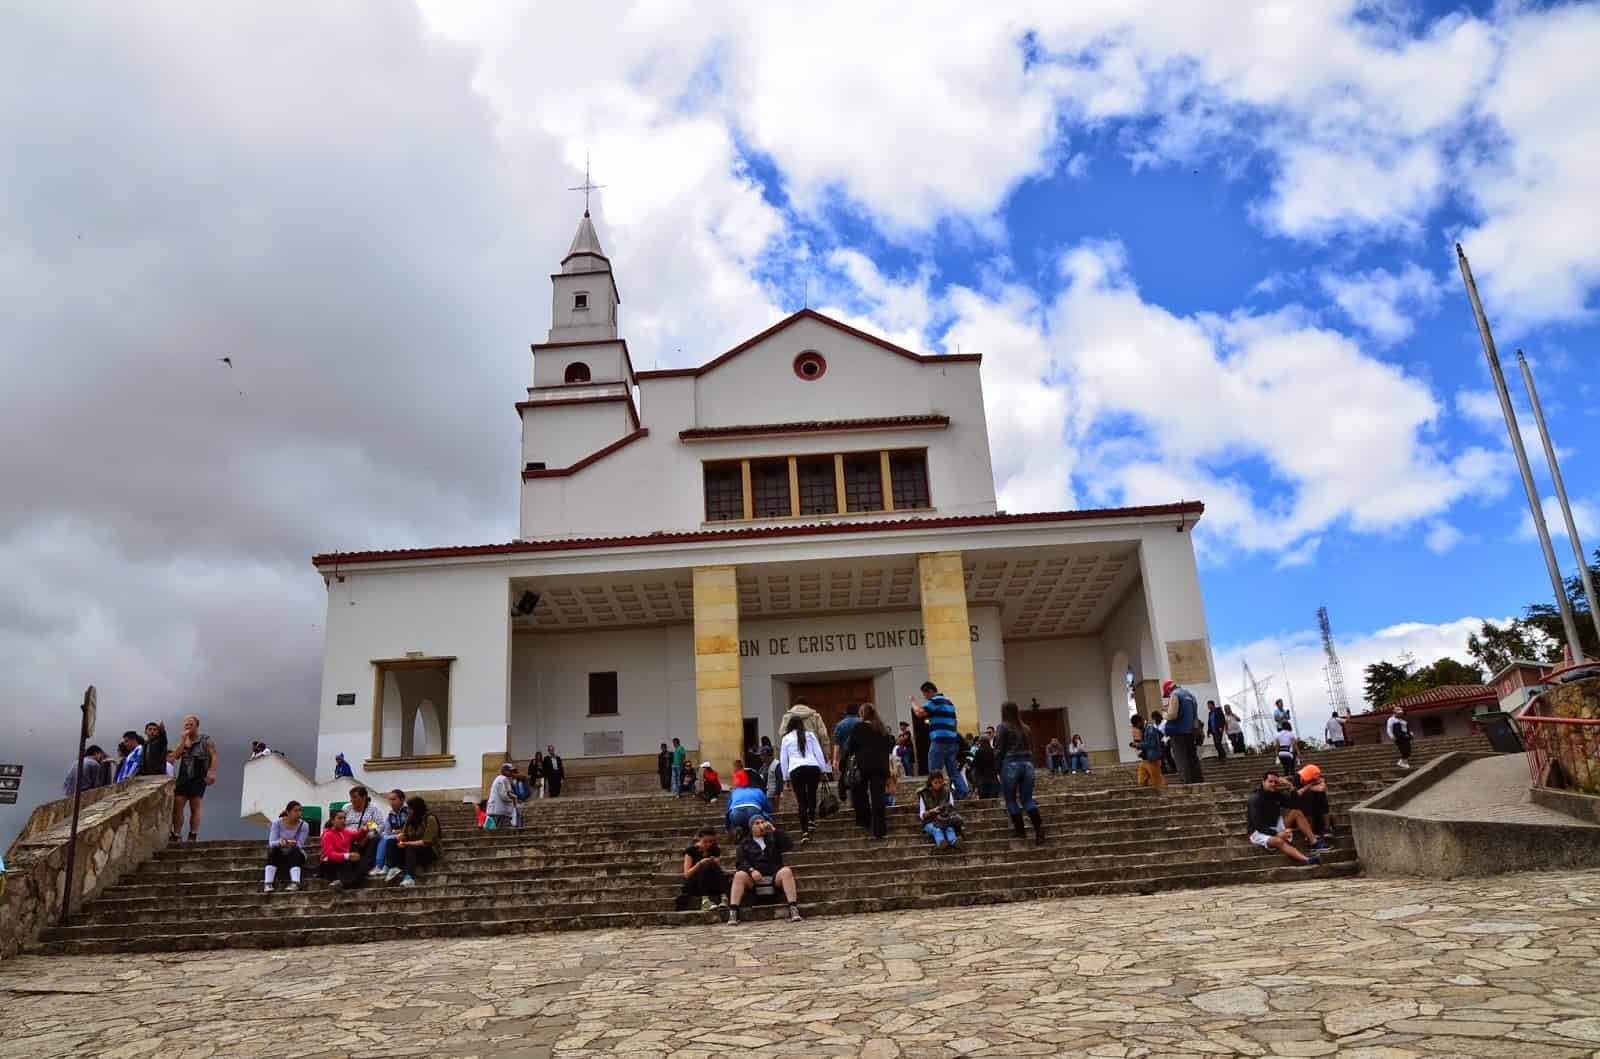 Church on Monserrate in Bogotá, Colombia